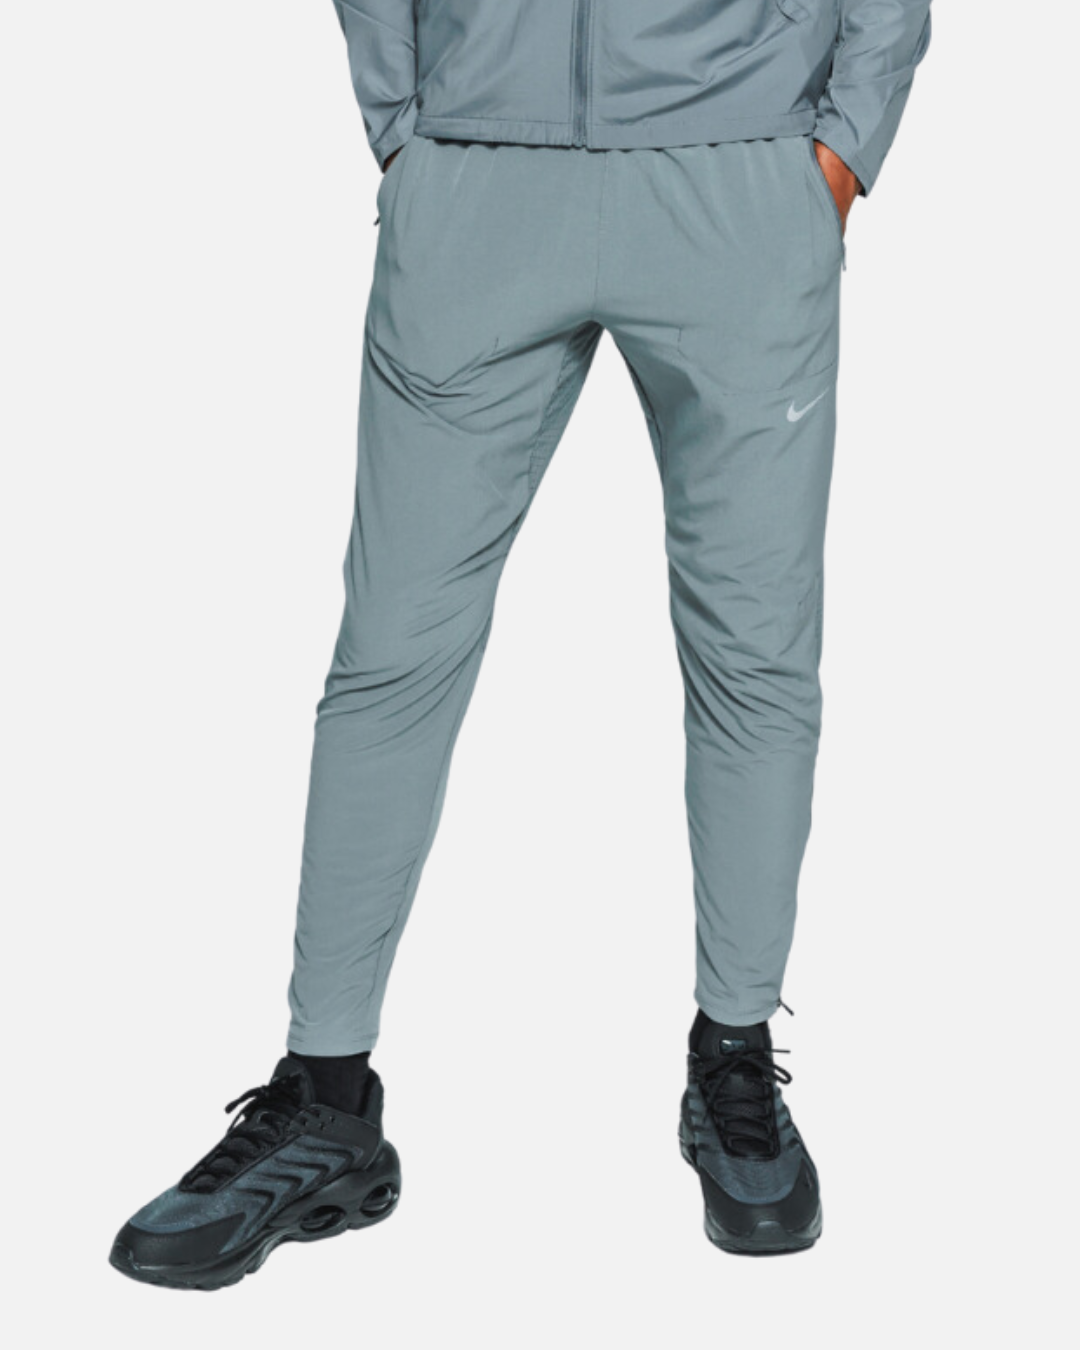 Pantaloni Nike Phenom - Grigi